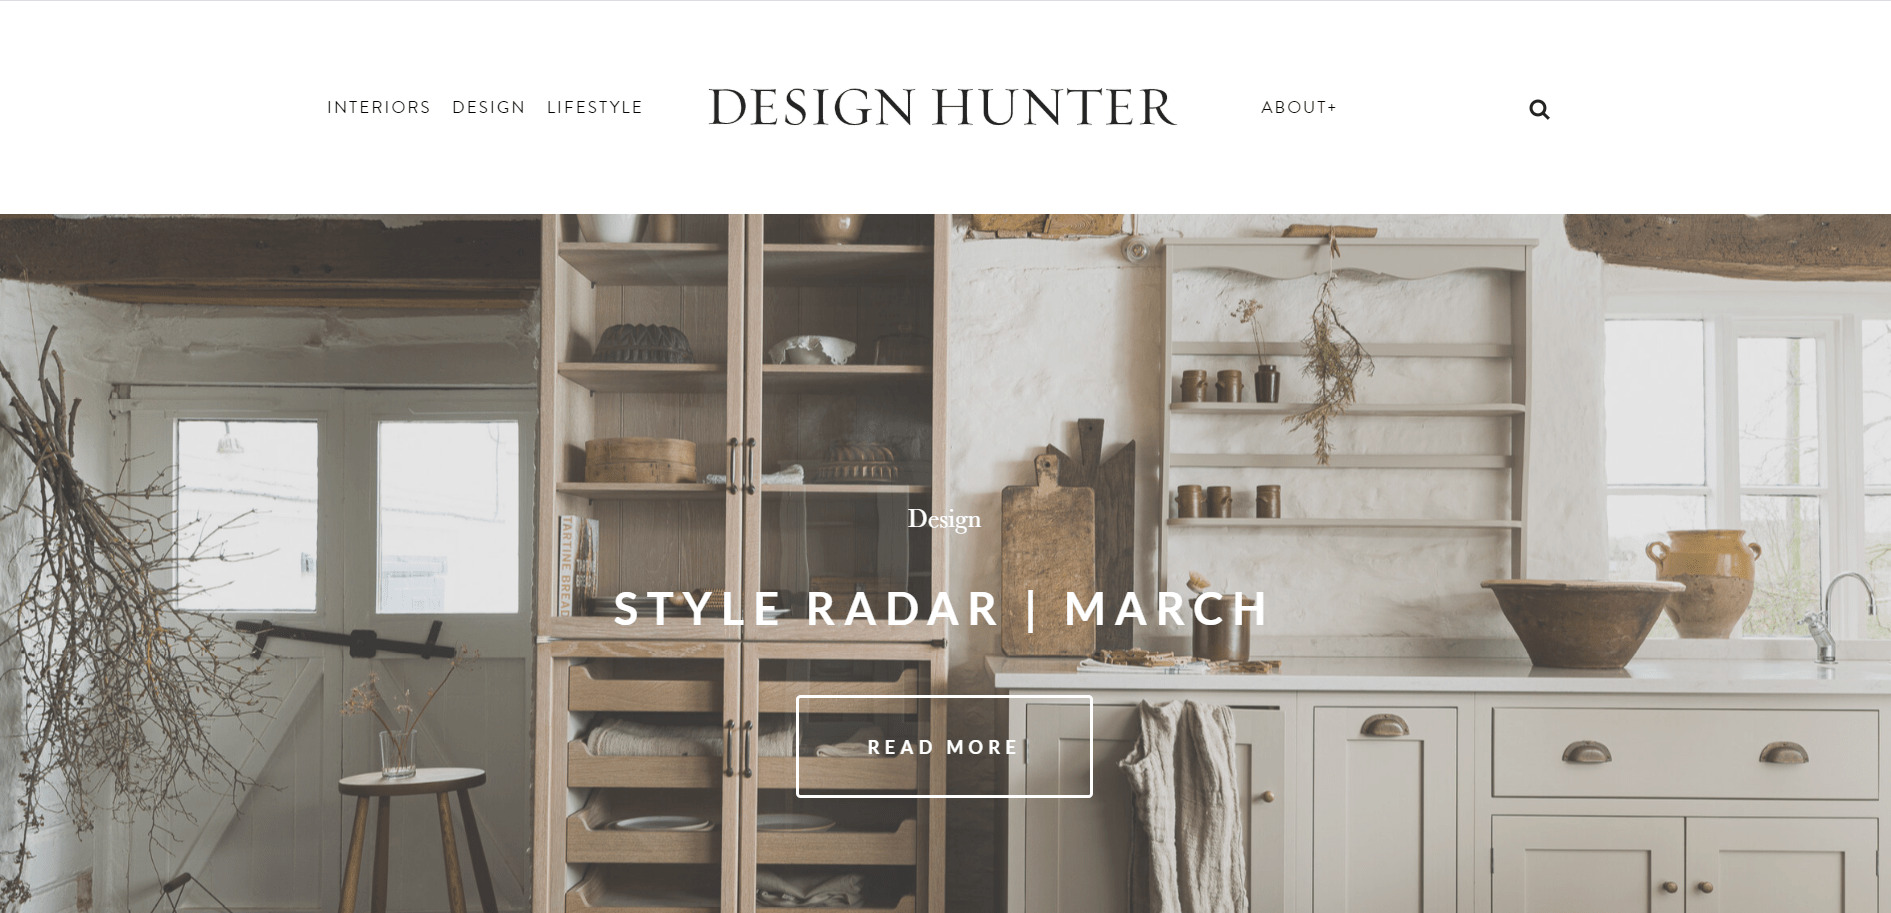 Top 10 Best Interior Design Blogs - Design Hunter